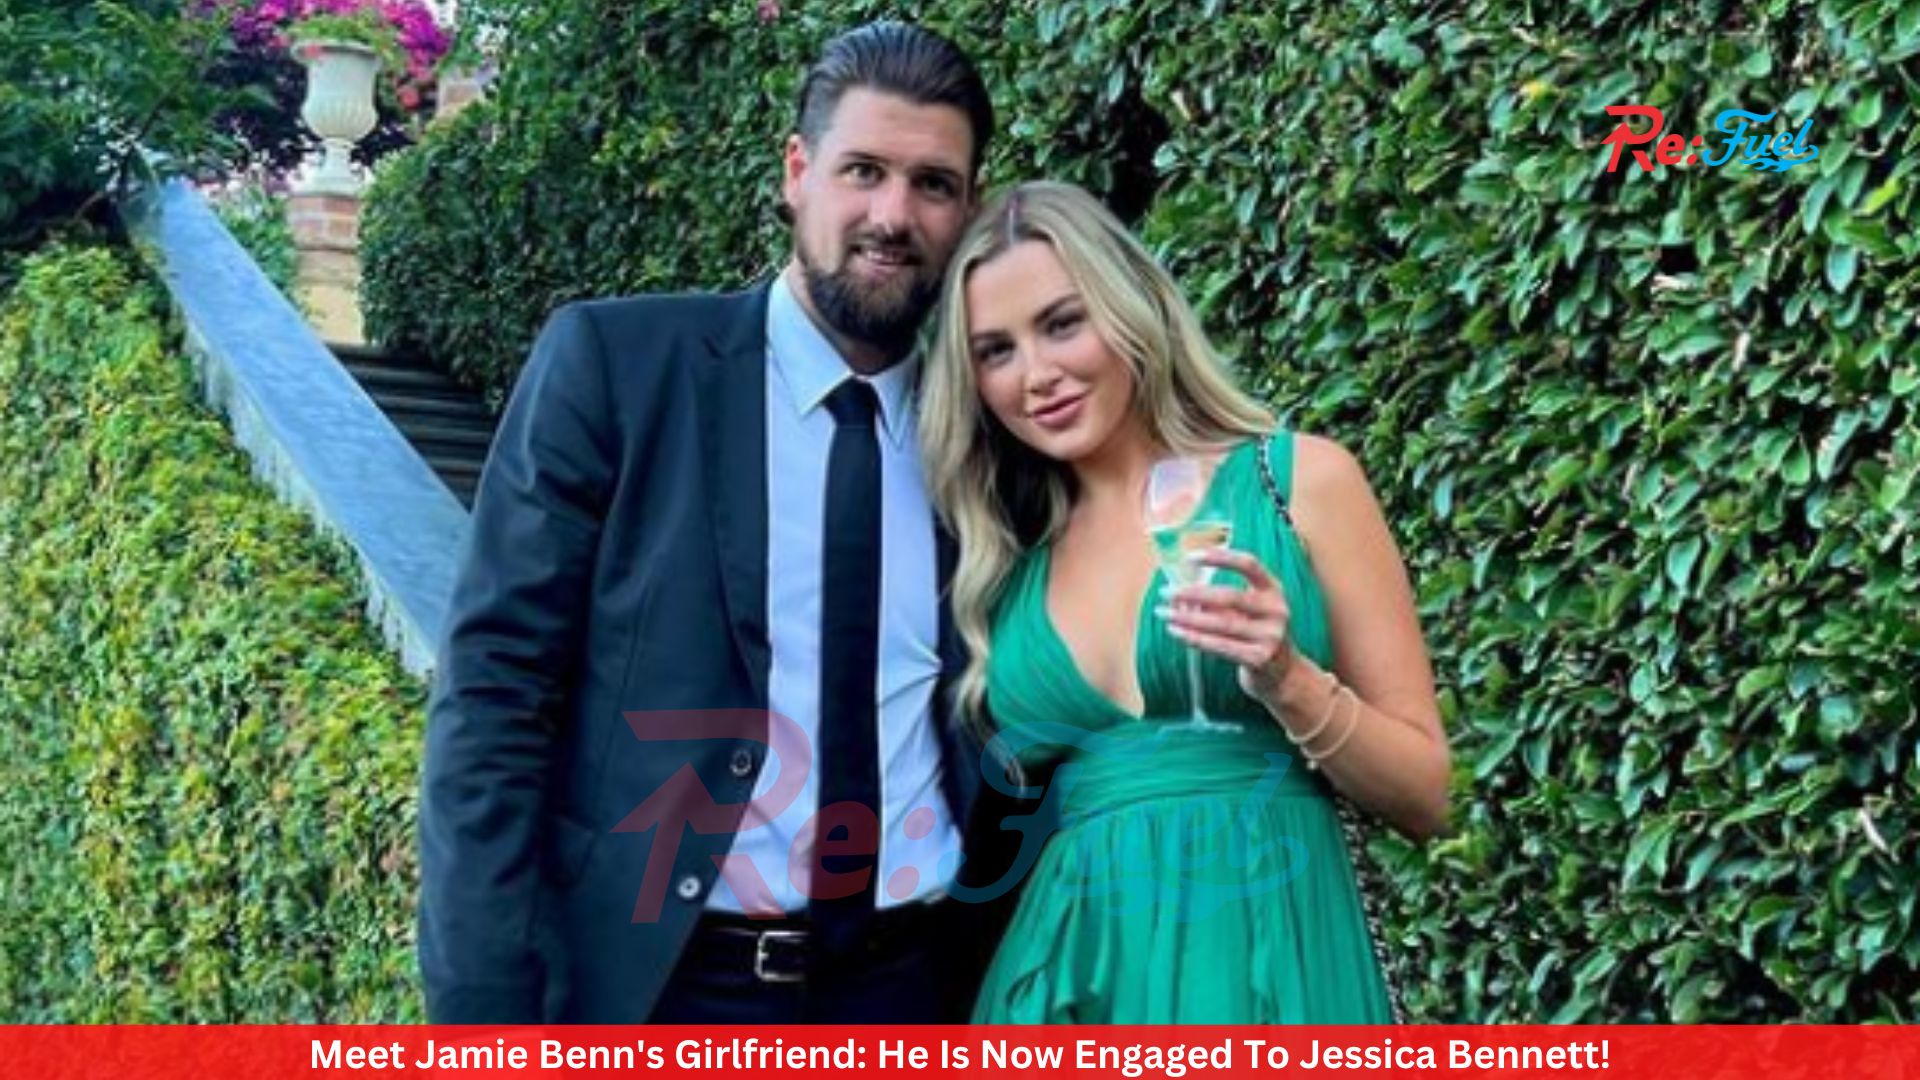 Meet Jamie Benn's Girlfriend: He Is Now Engaged To Jessica Bennett!